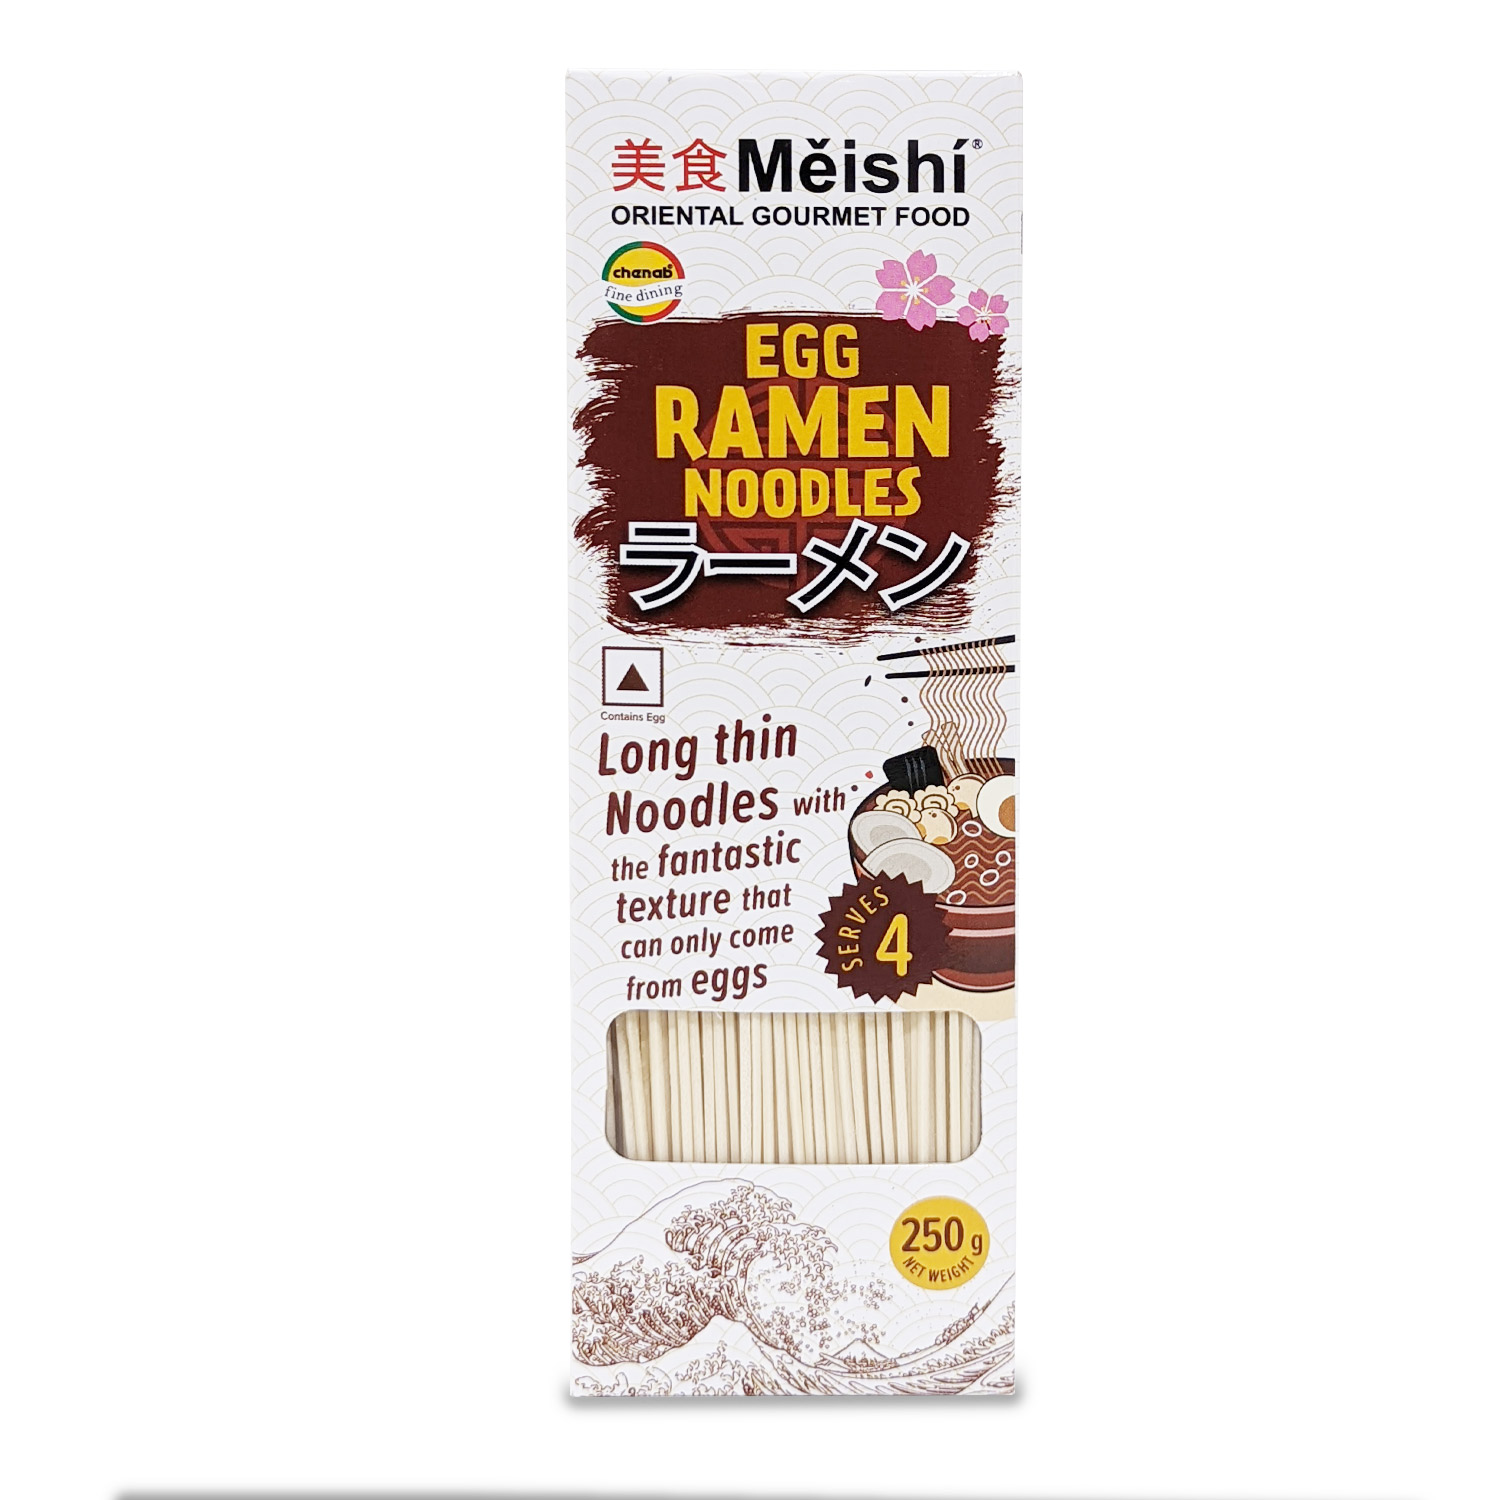 Meishi Ramen Egg Noodles, 250g